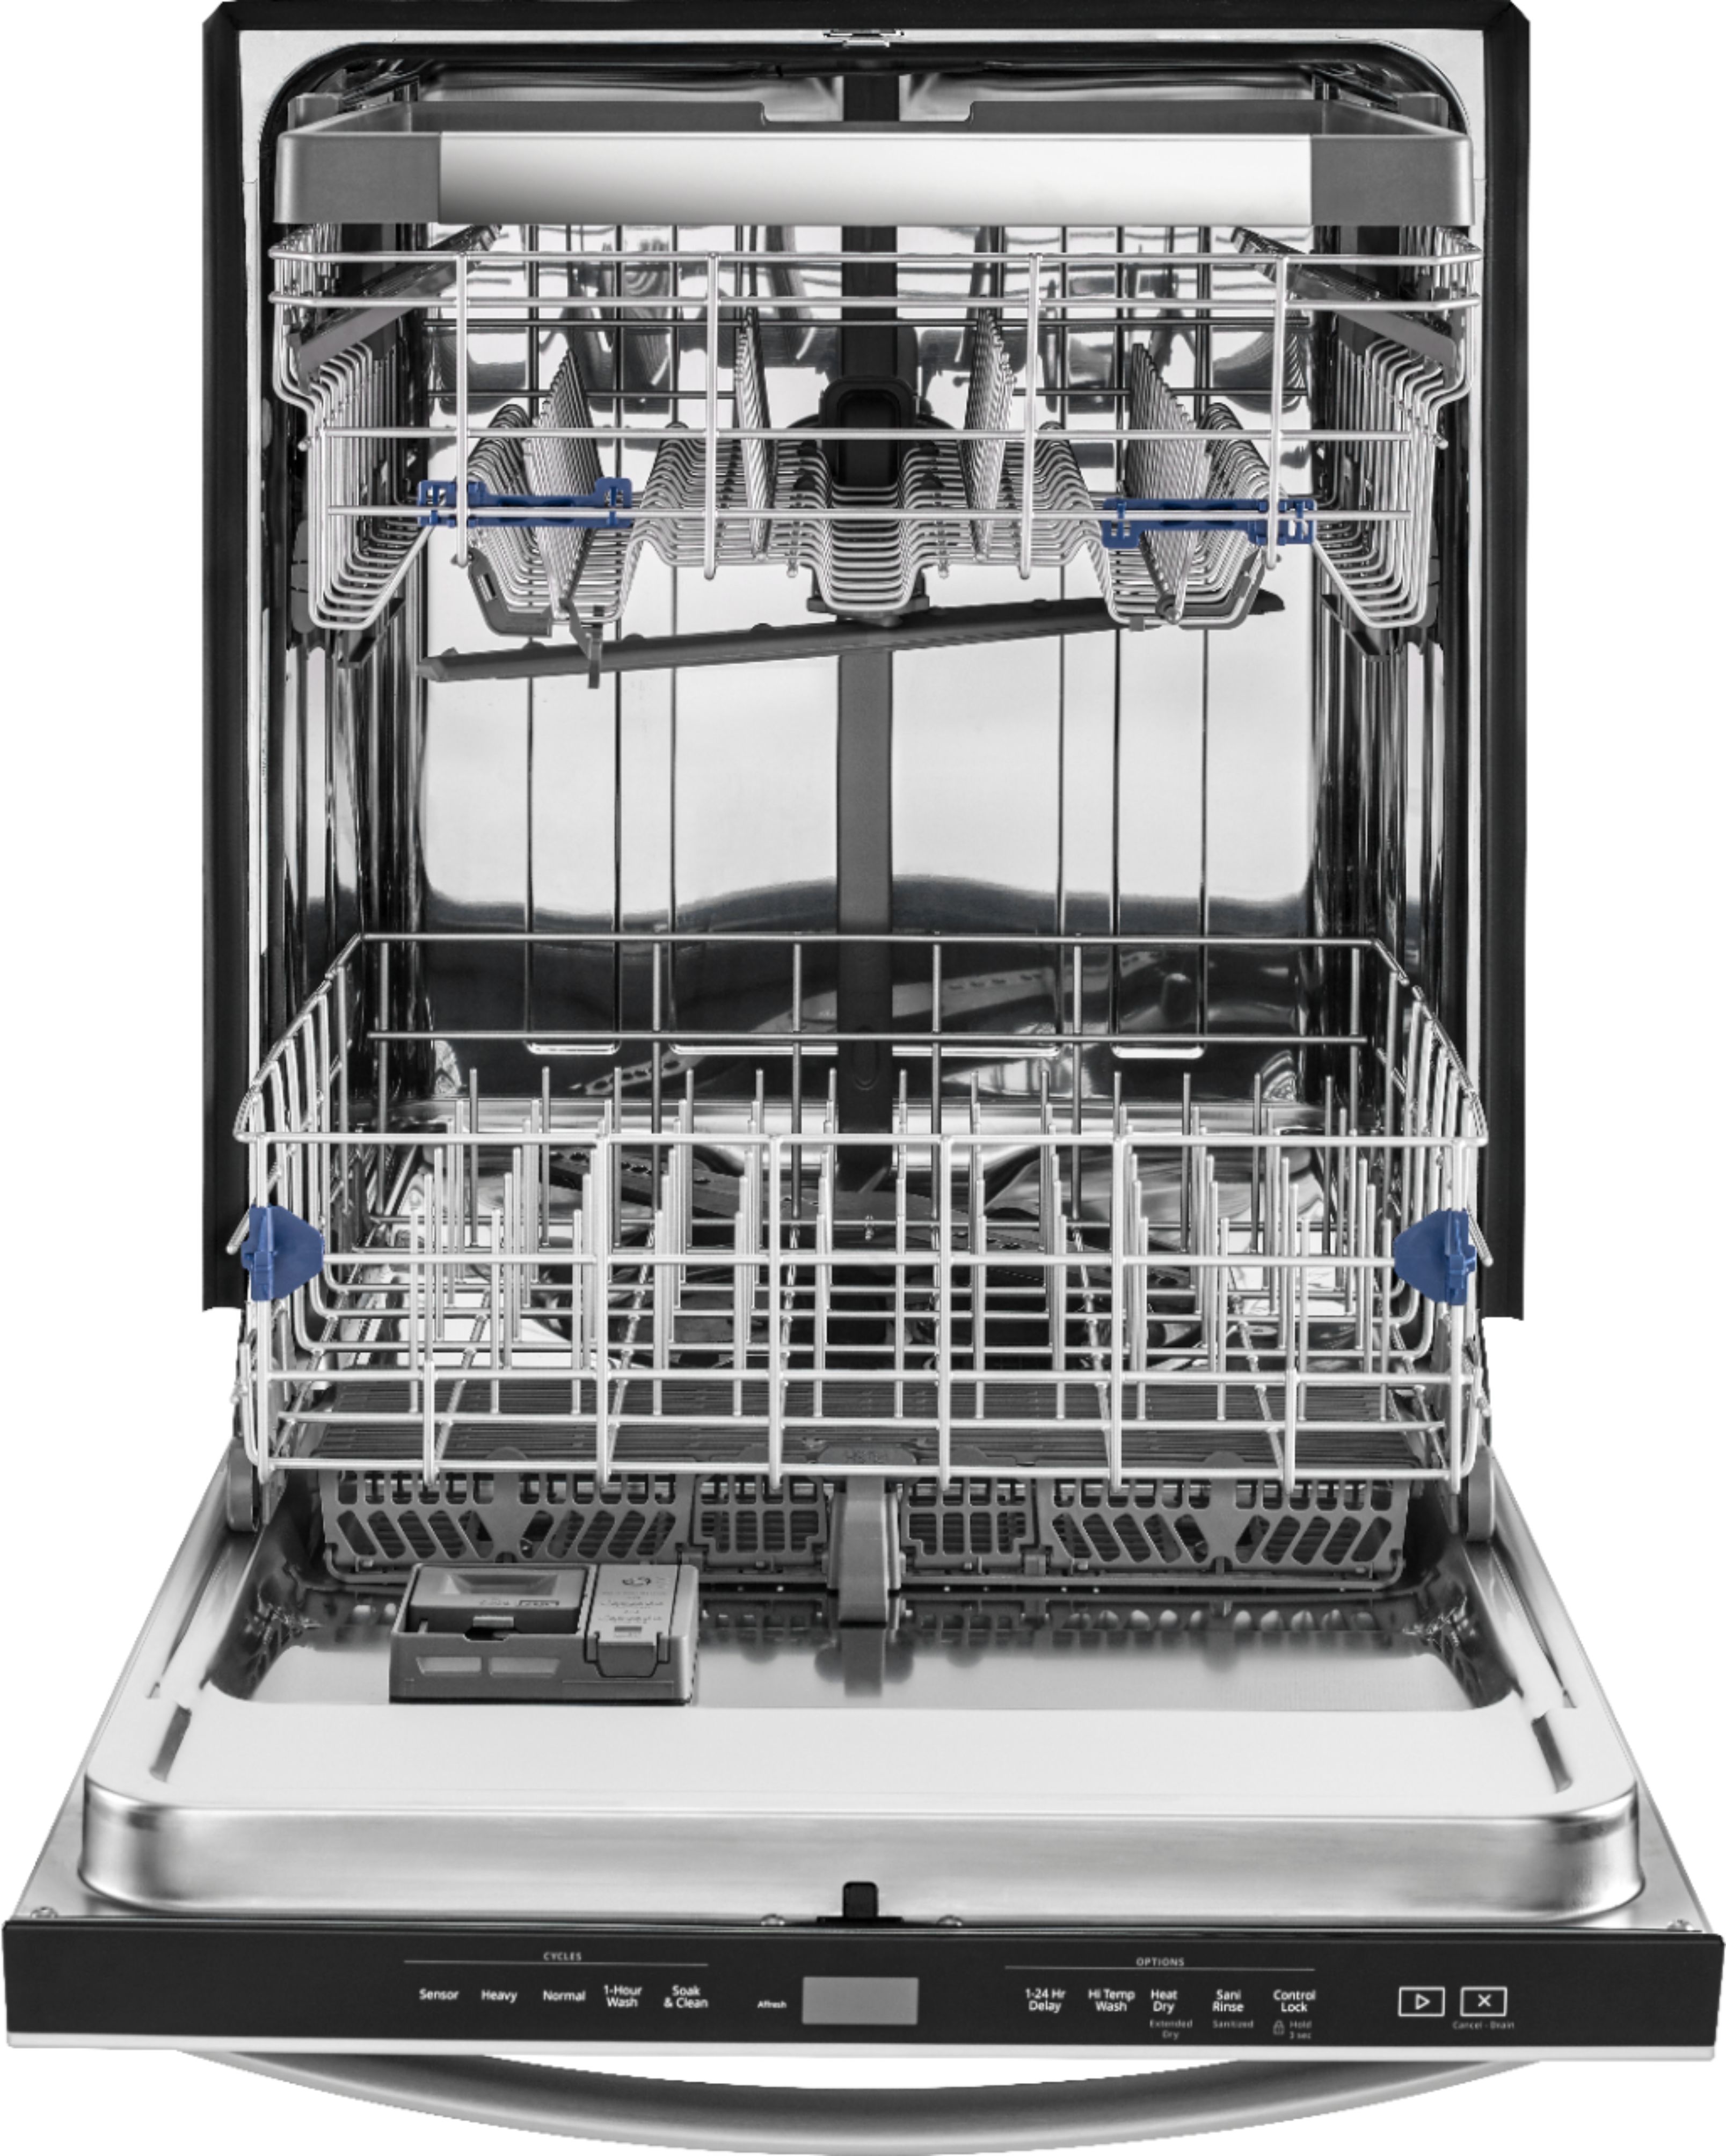 whirlpool dishwasher wdt970sahz reviews